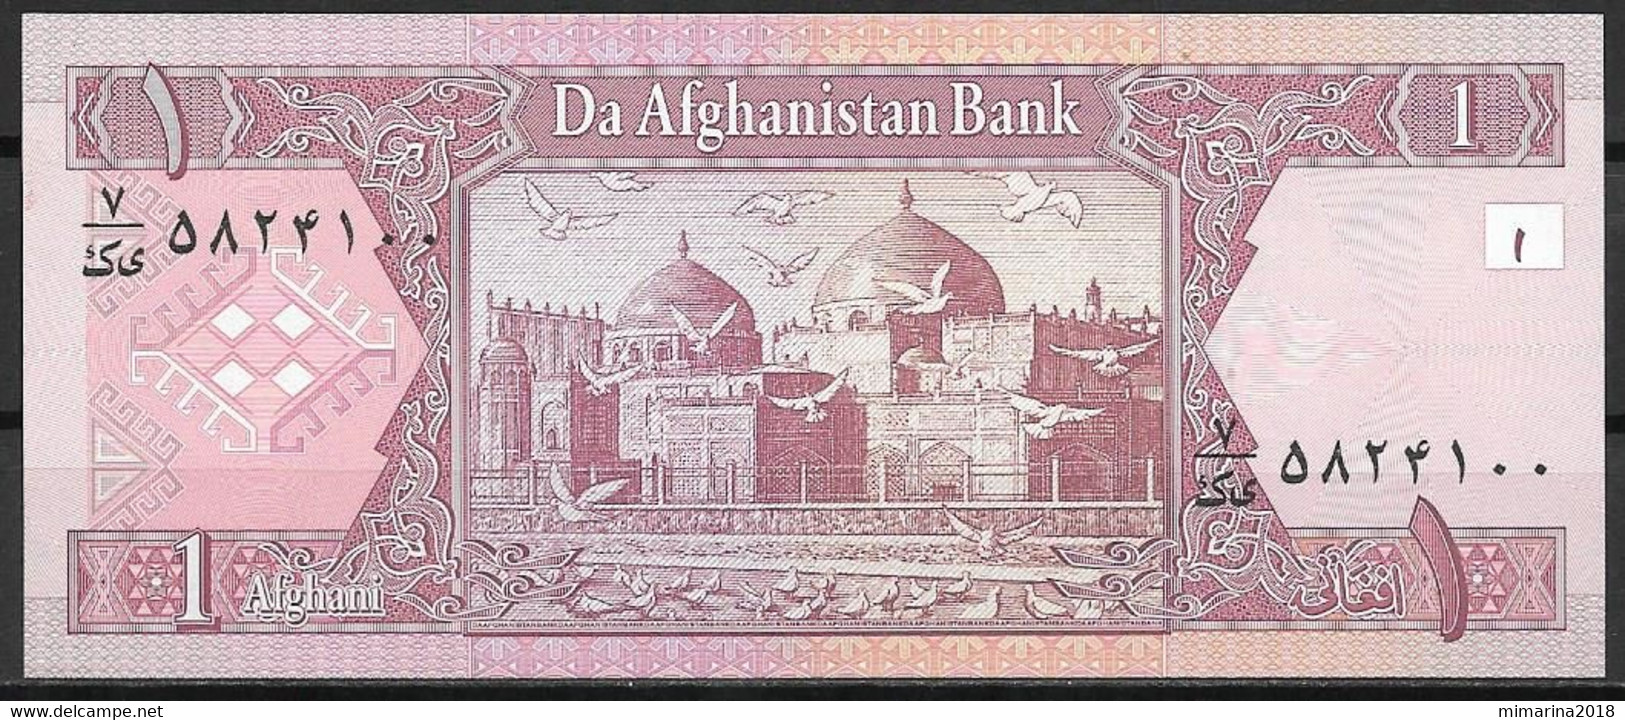 AFGHANISTAN  P64  UNC  1 AFGHANI - Afghanistan